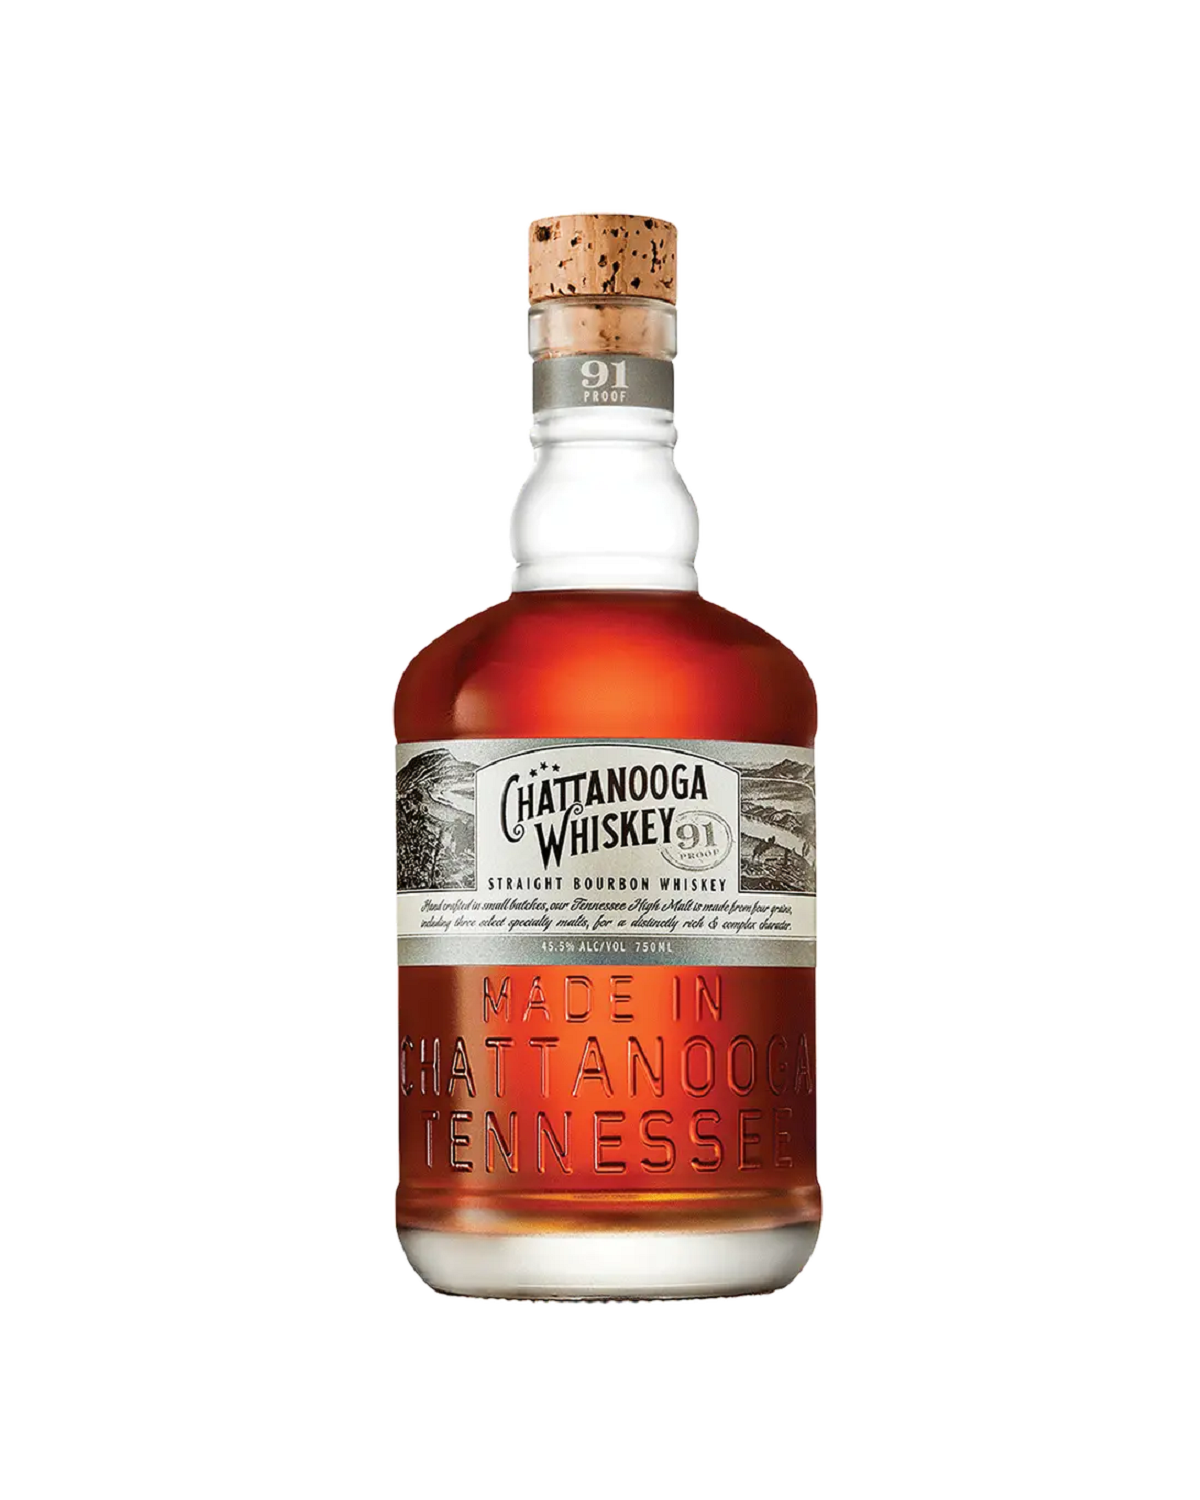 Chattanooga Whiskey 91 750ml